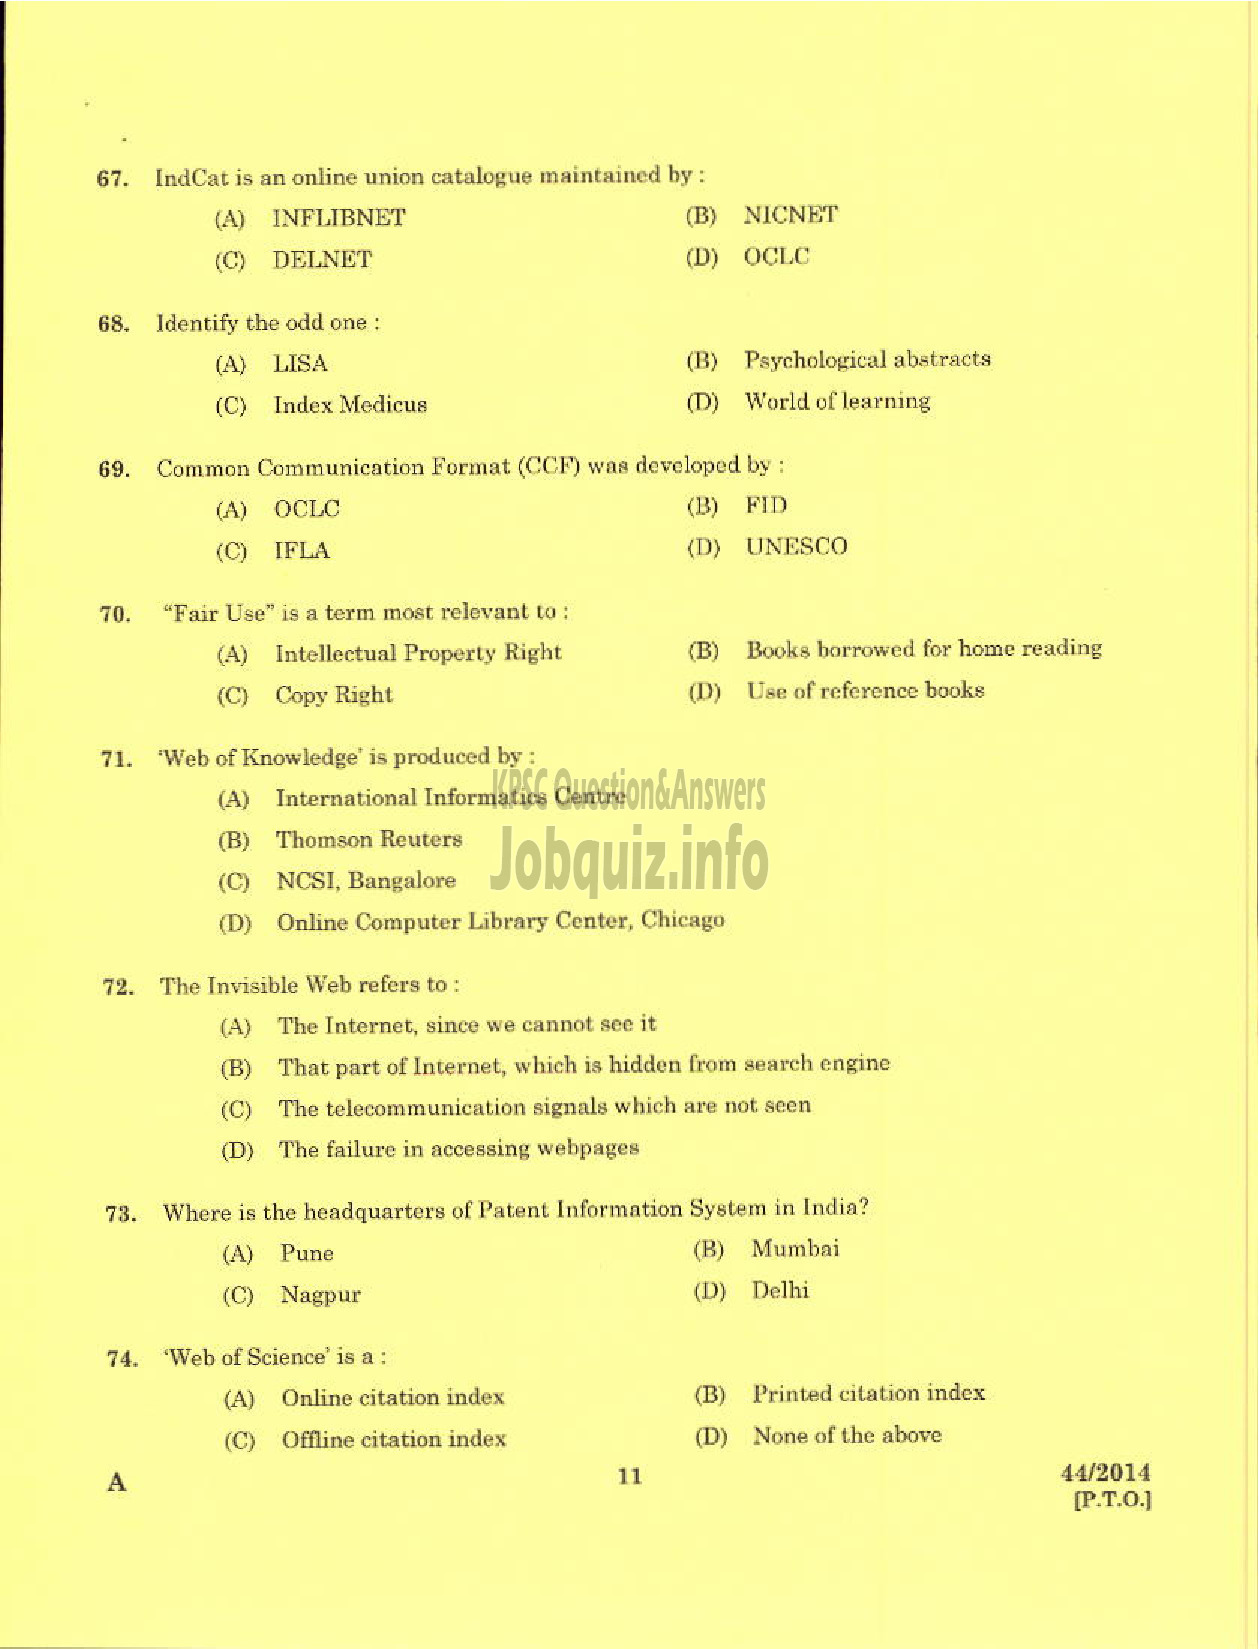 Kerala PSC Question Paper - LIBRARIAN GR II ALAPPUZHA KERALA MUNICIPAL COMMON SERVICE-9